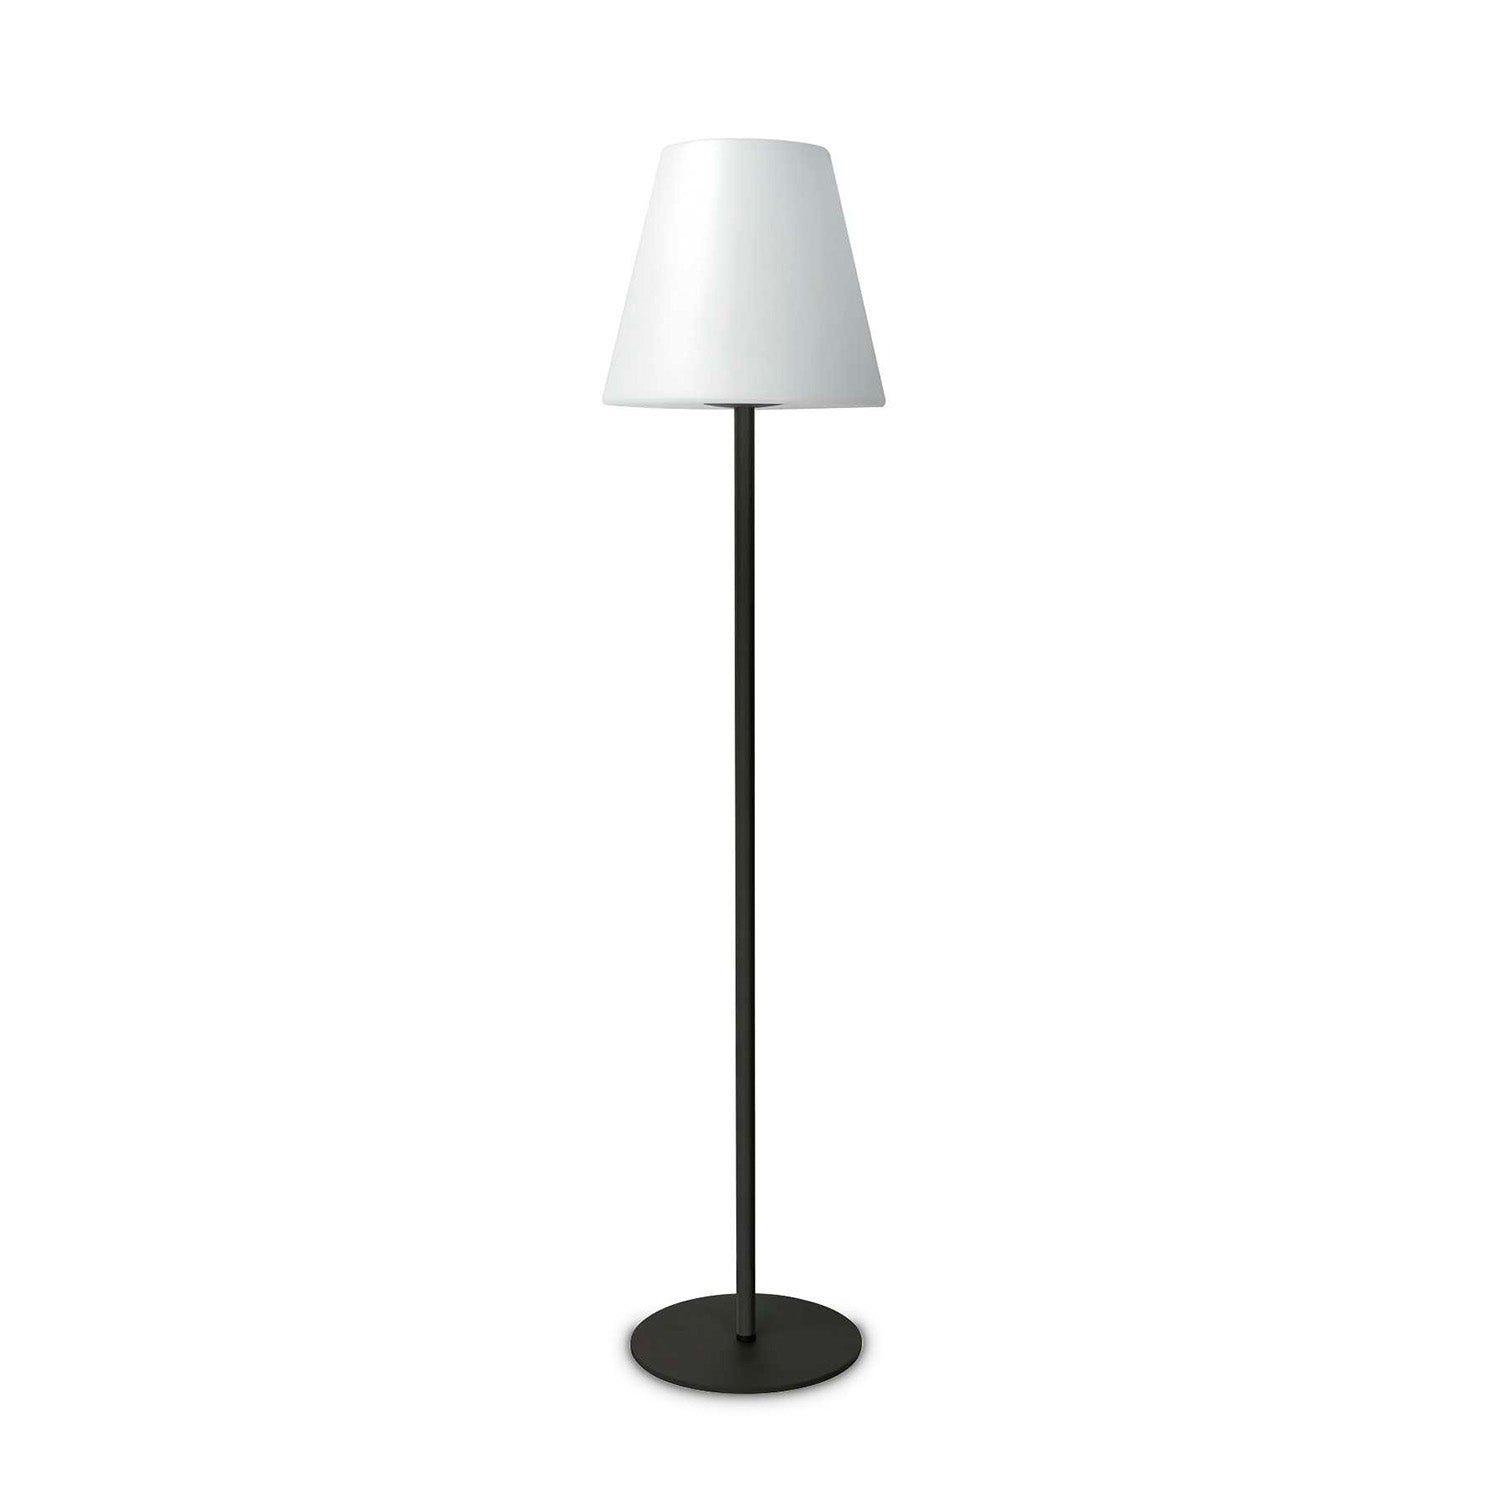 ARCADIA - Modern black and white outdoor floor lamp